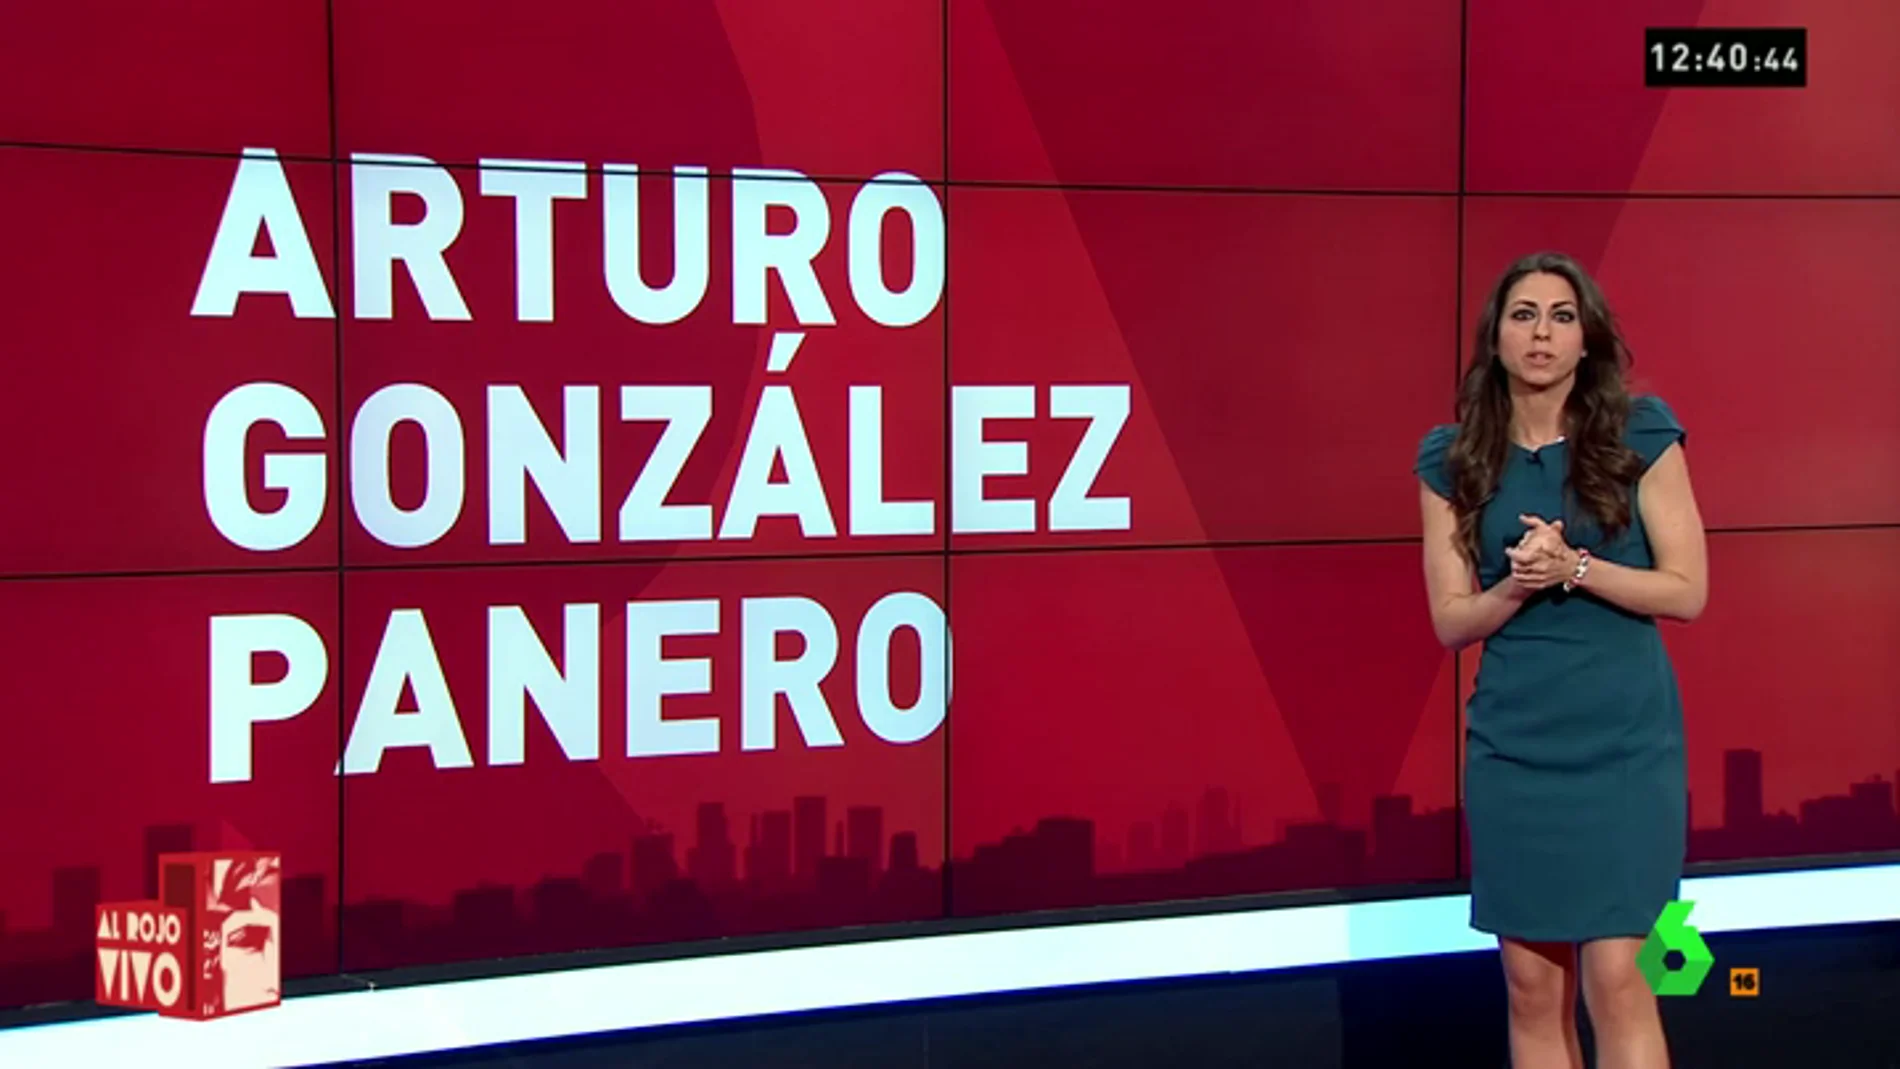 ¿Quién es González Panero?